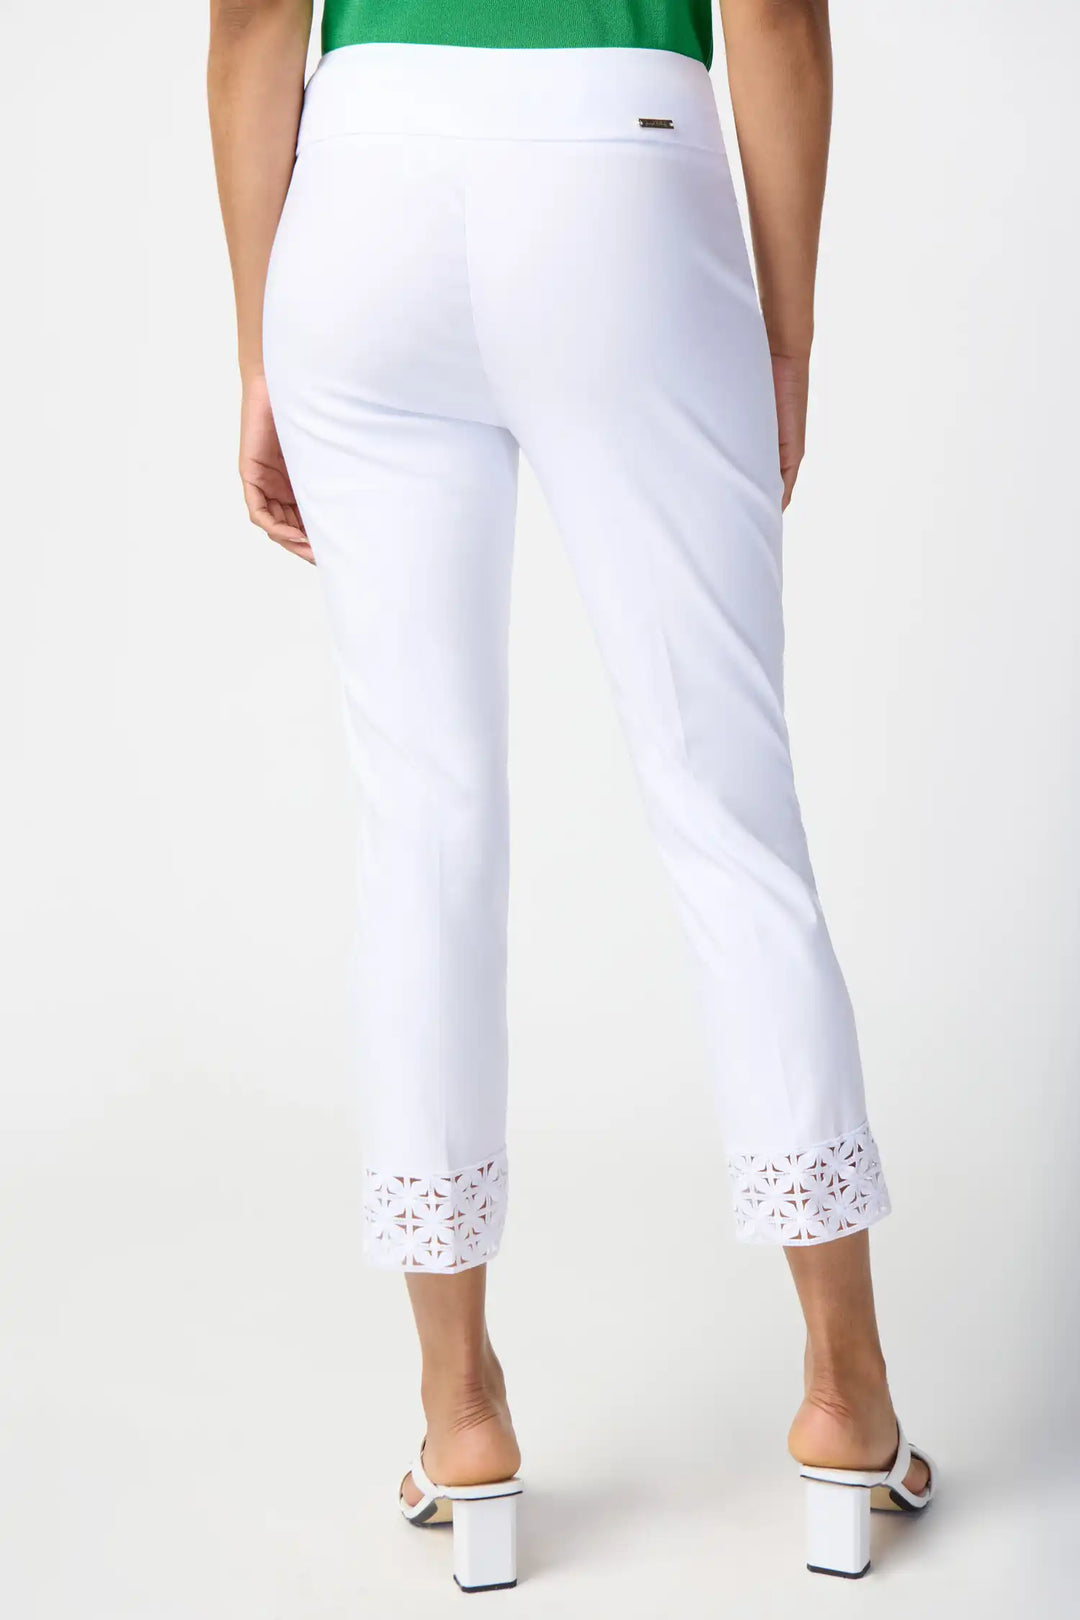 "Joseph Ribkoff White Crop Pull-on Pants Style 241102"